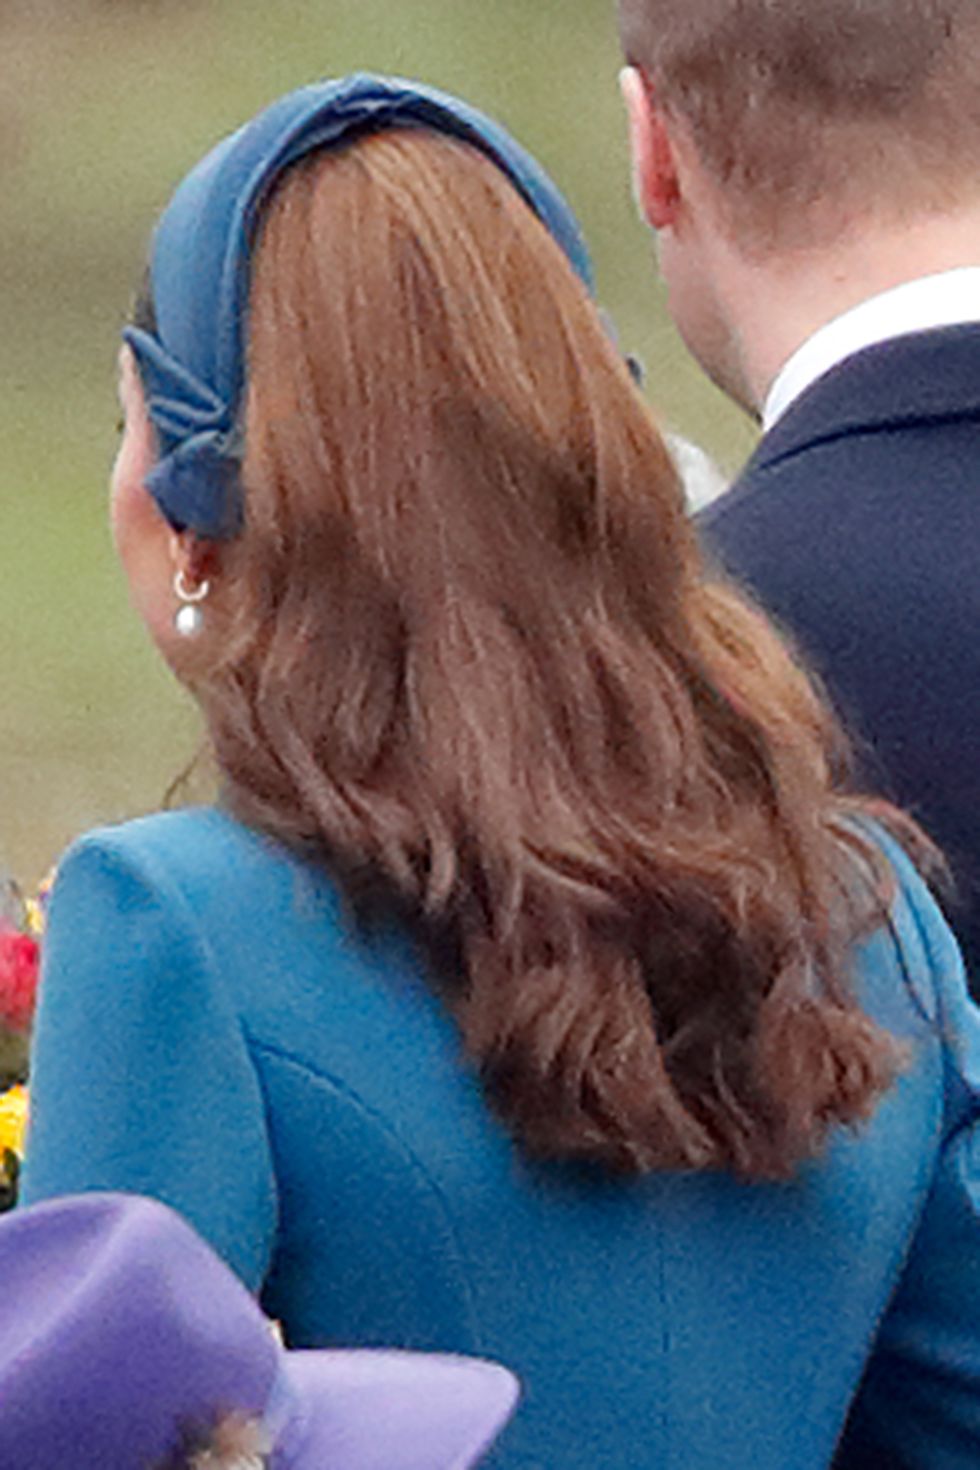 Duchess of Cambridge Sunday service 2019 blue headband and coat